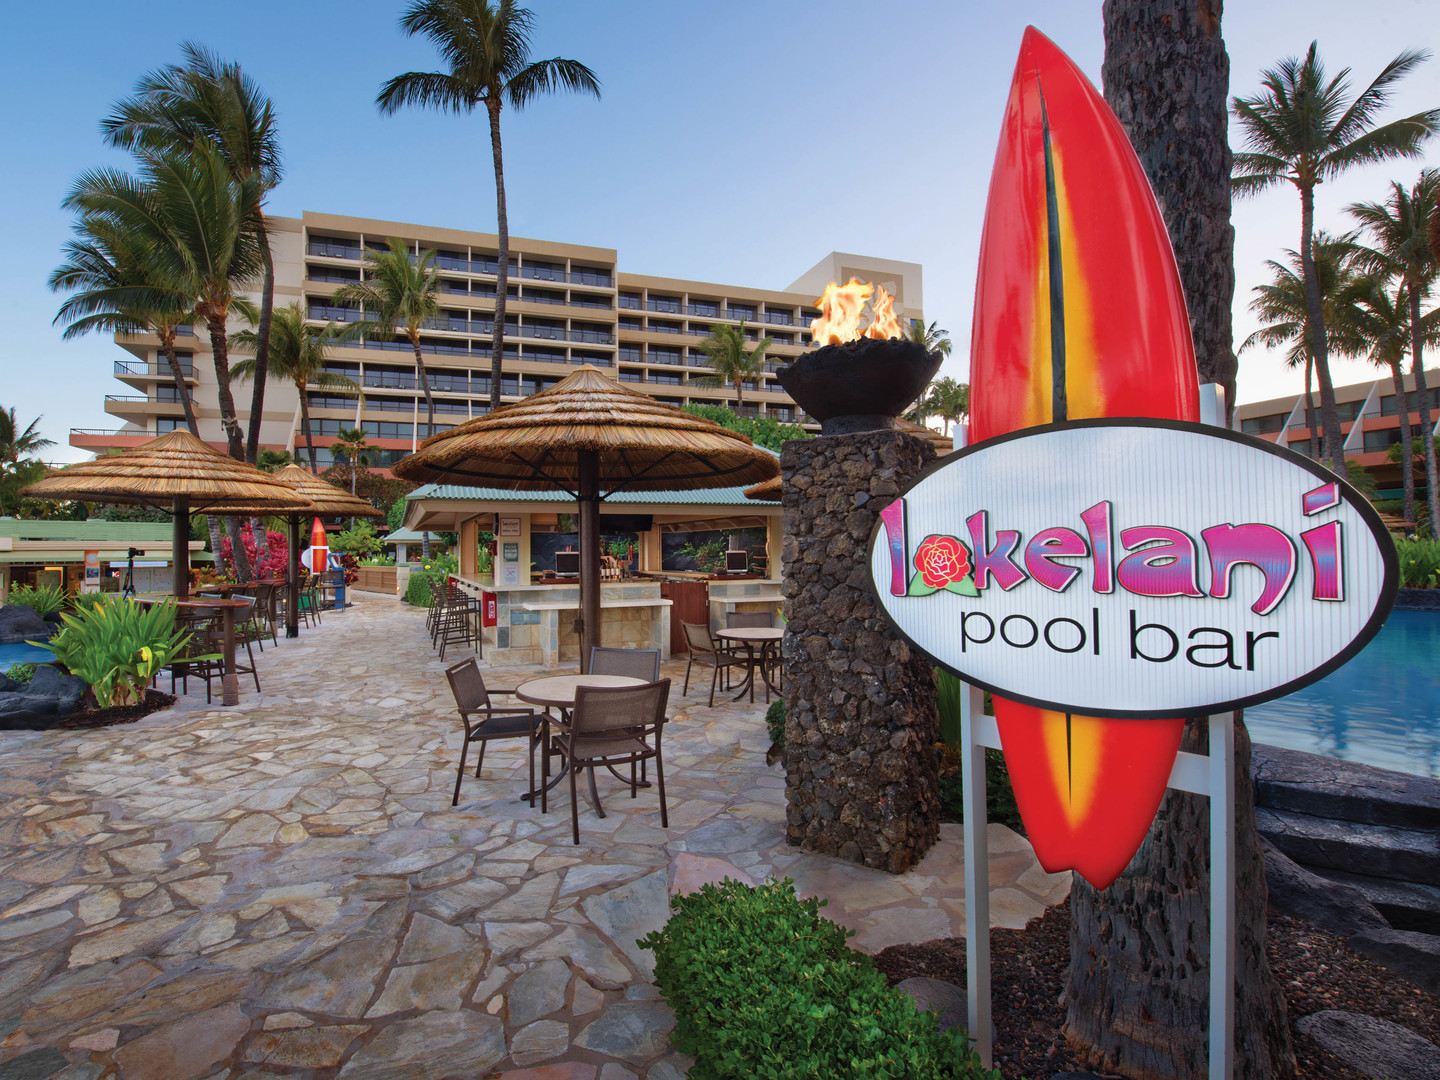 Marriott's Maui Ocean Club - Molokai, Maui, and Lanai Towers Lokelani Pool Bar. Marriott's Maui Ocean Club - Molokai, Maui, and Lanai Towers is located in Lāhainā, Maui, Hawai‘i United States.